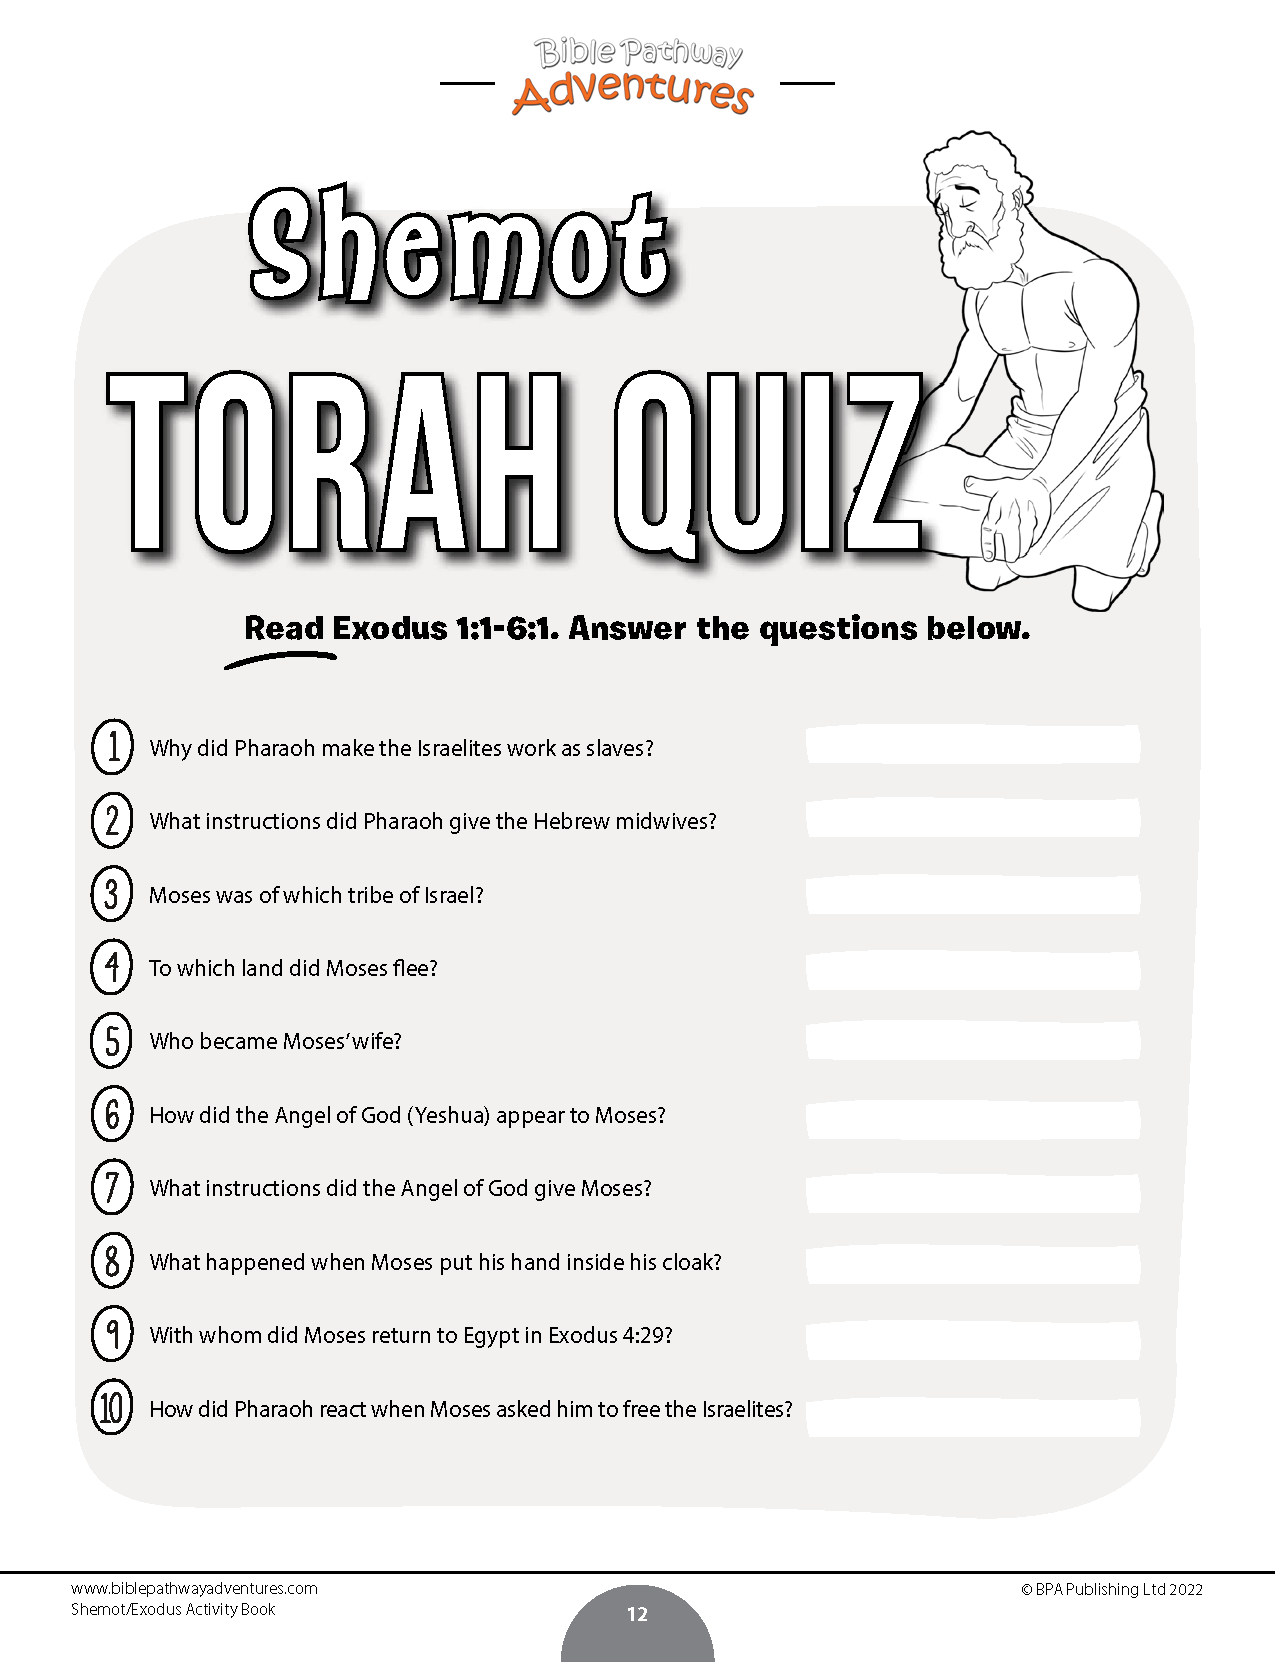 Shemot / Exodus Torah Portion Activity Book (PDF)